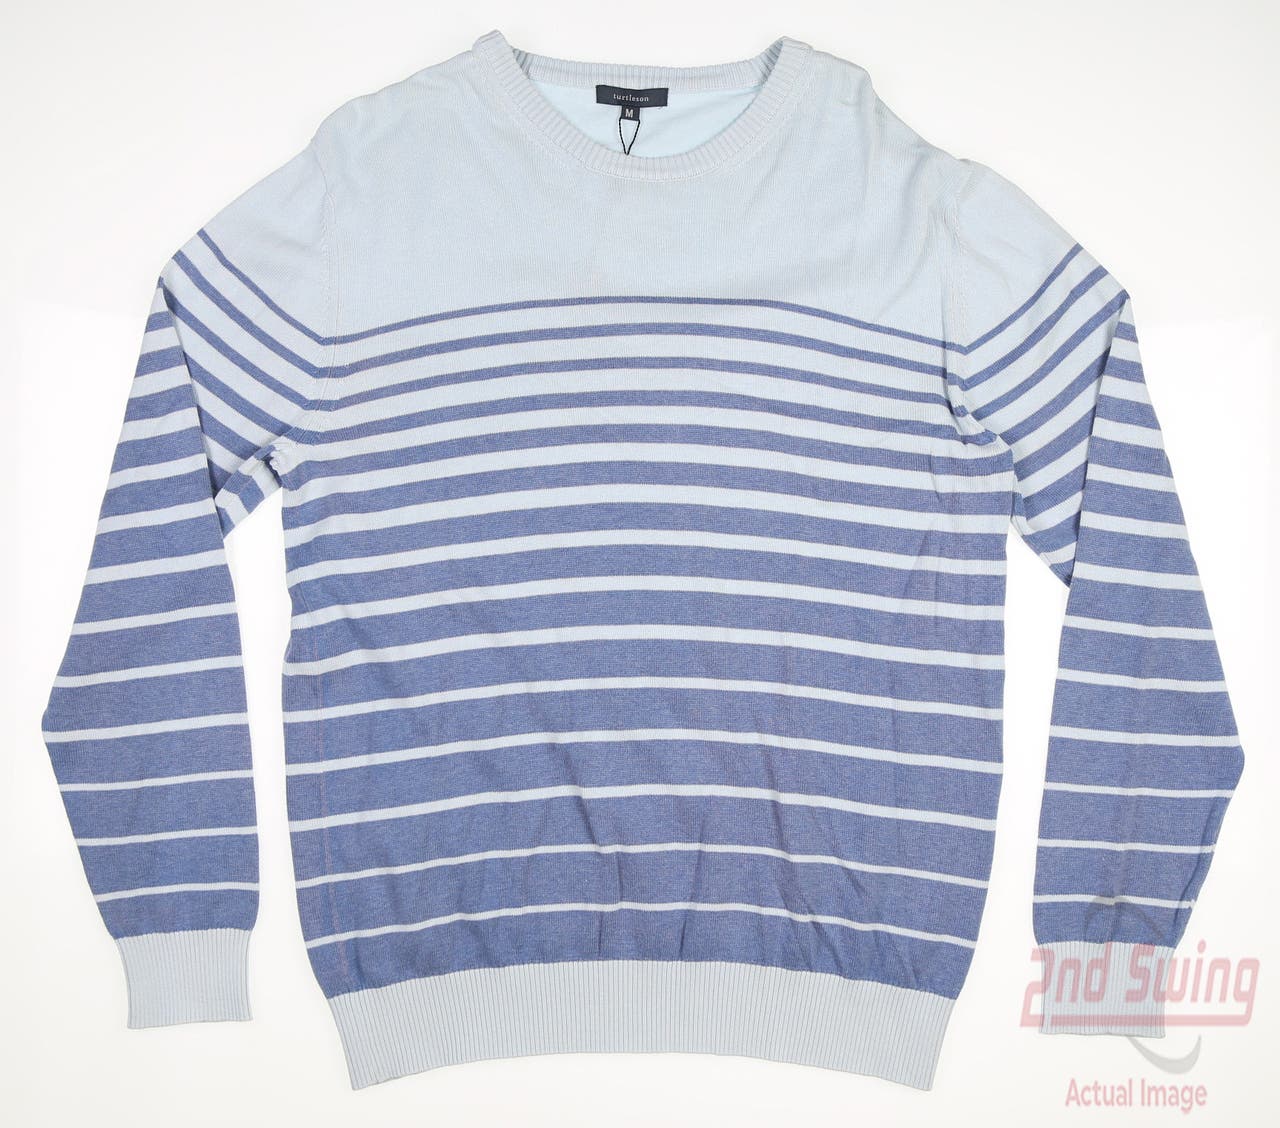 New Mens Turtleson Crockett Stripe Sweater Medium M Sky Denim MSRP $185 MF20S05-SKDE